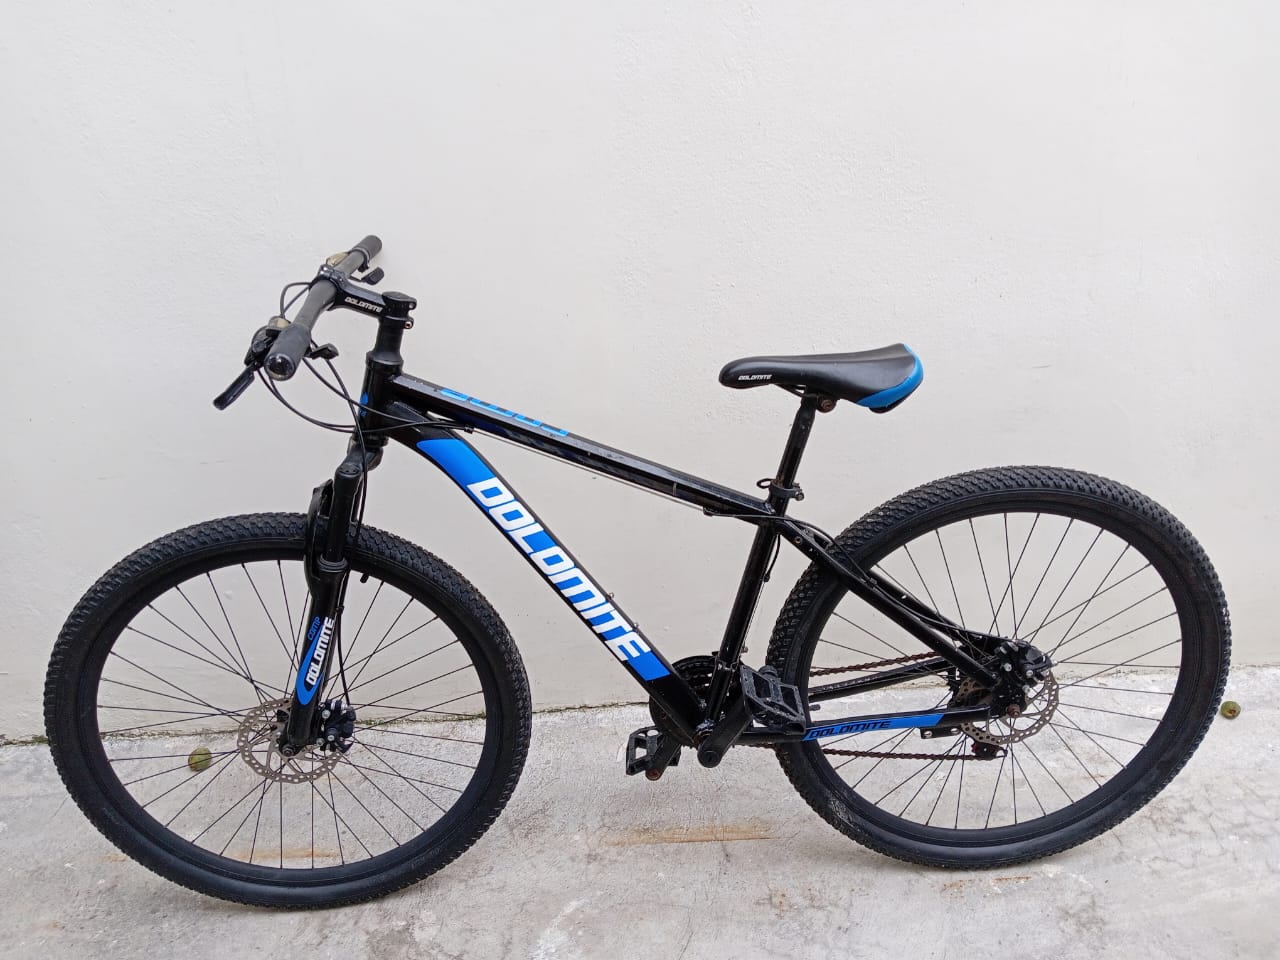 Vendo Bicicleta marca Dolomite negra con detalles azules poco usada Foto 7234011-1.jpg